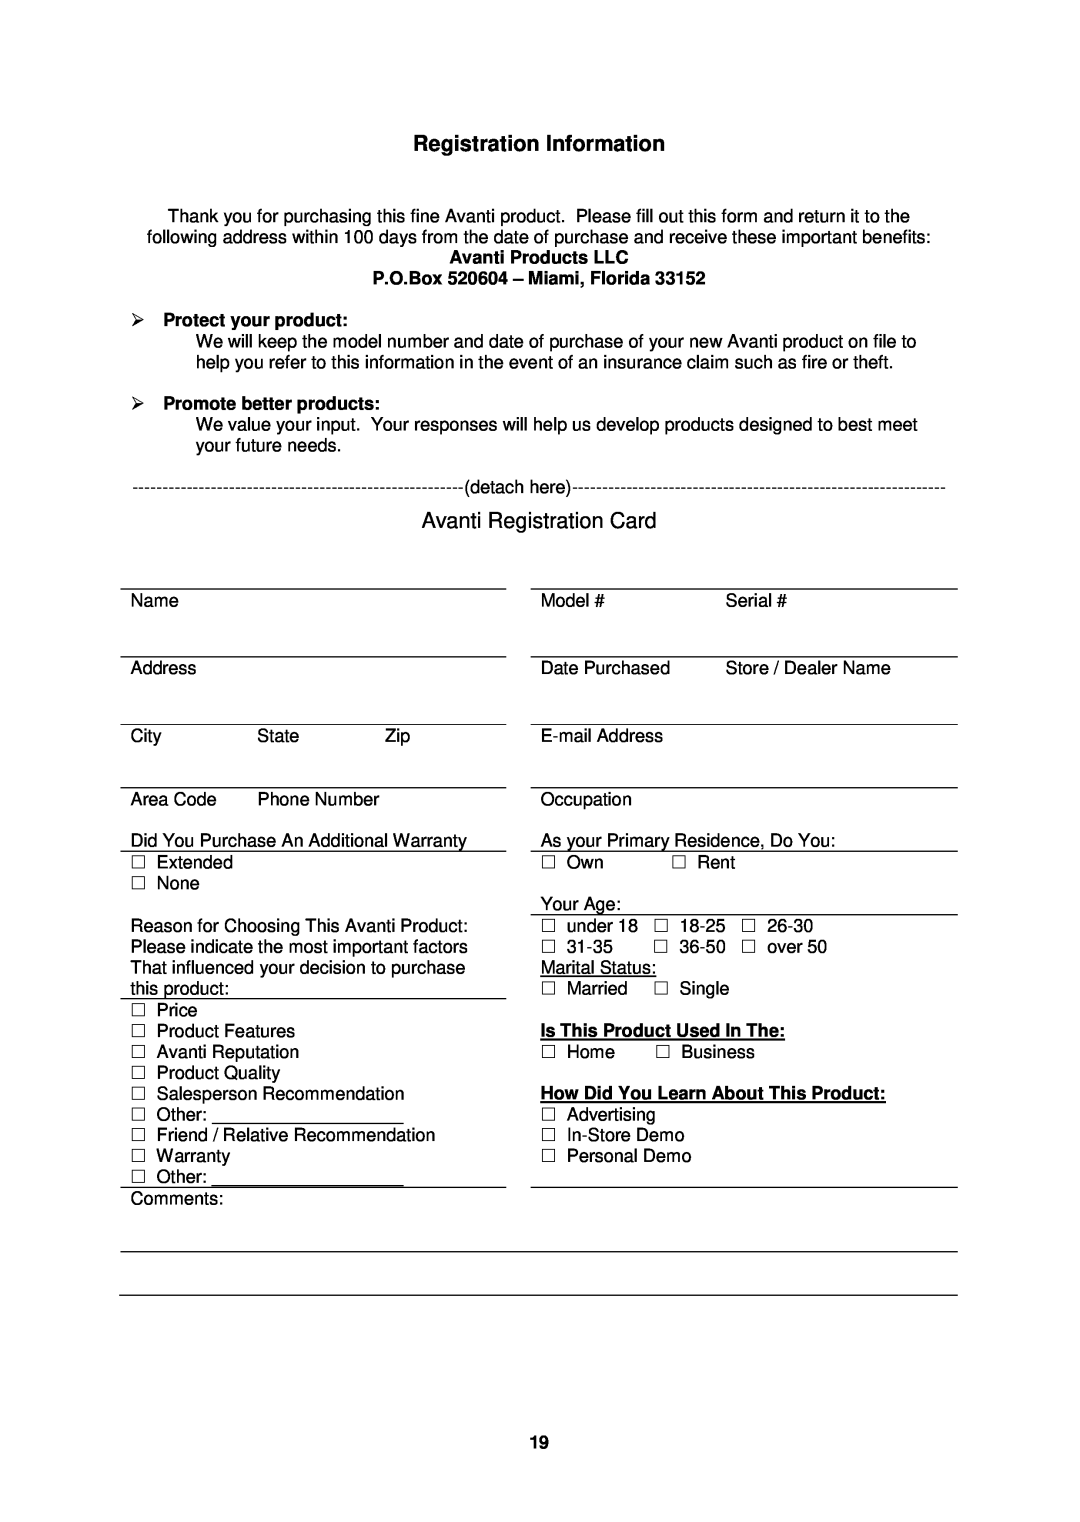 Avanti WCR506SS Registration Information, Avanti Registration Card, Avanti Products LLC P.O.Box 520604 - Miami, Florida 